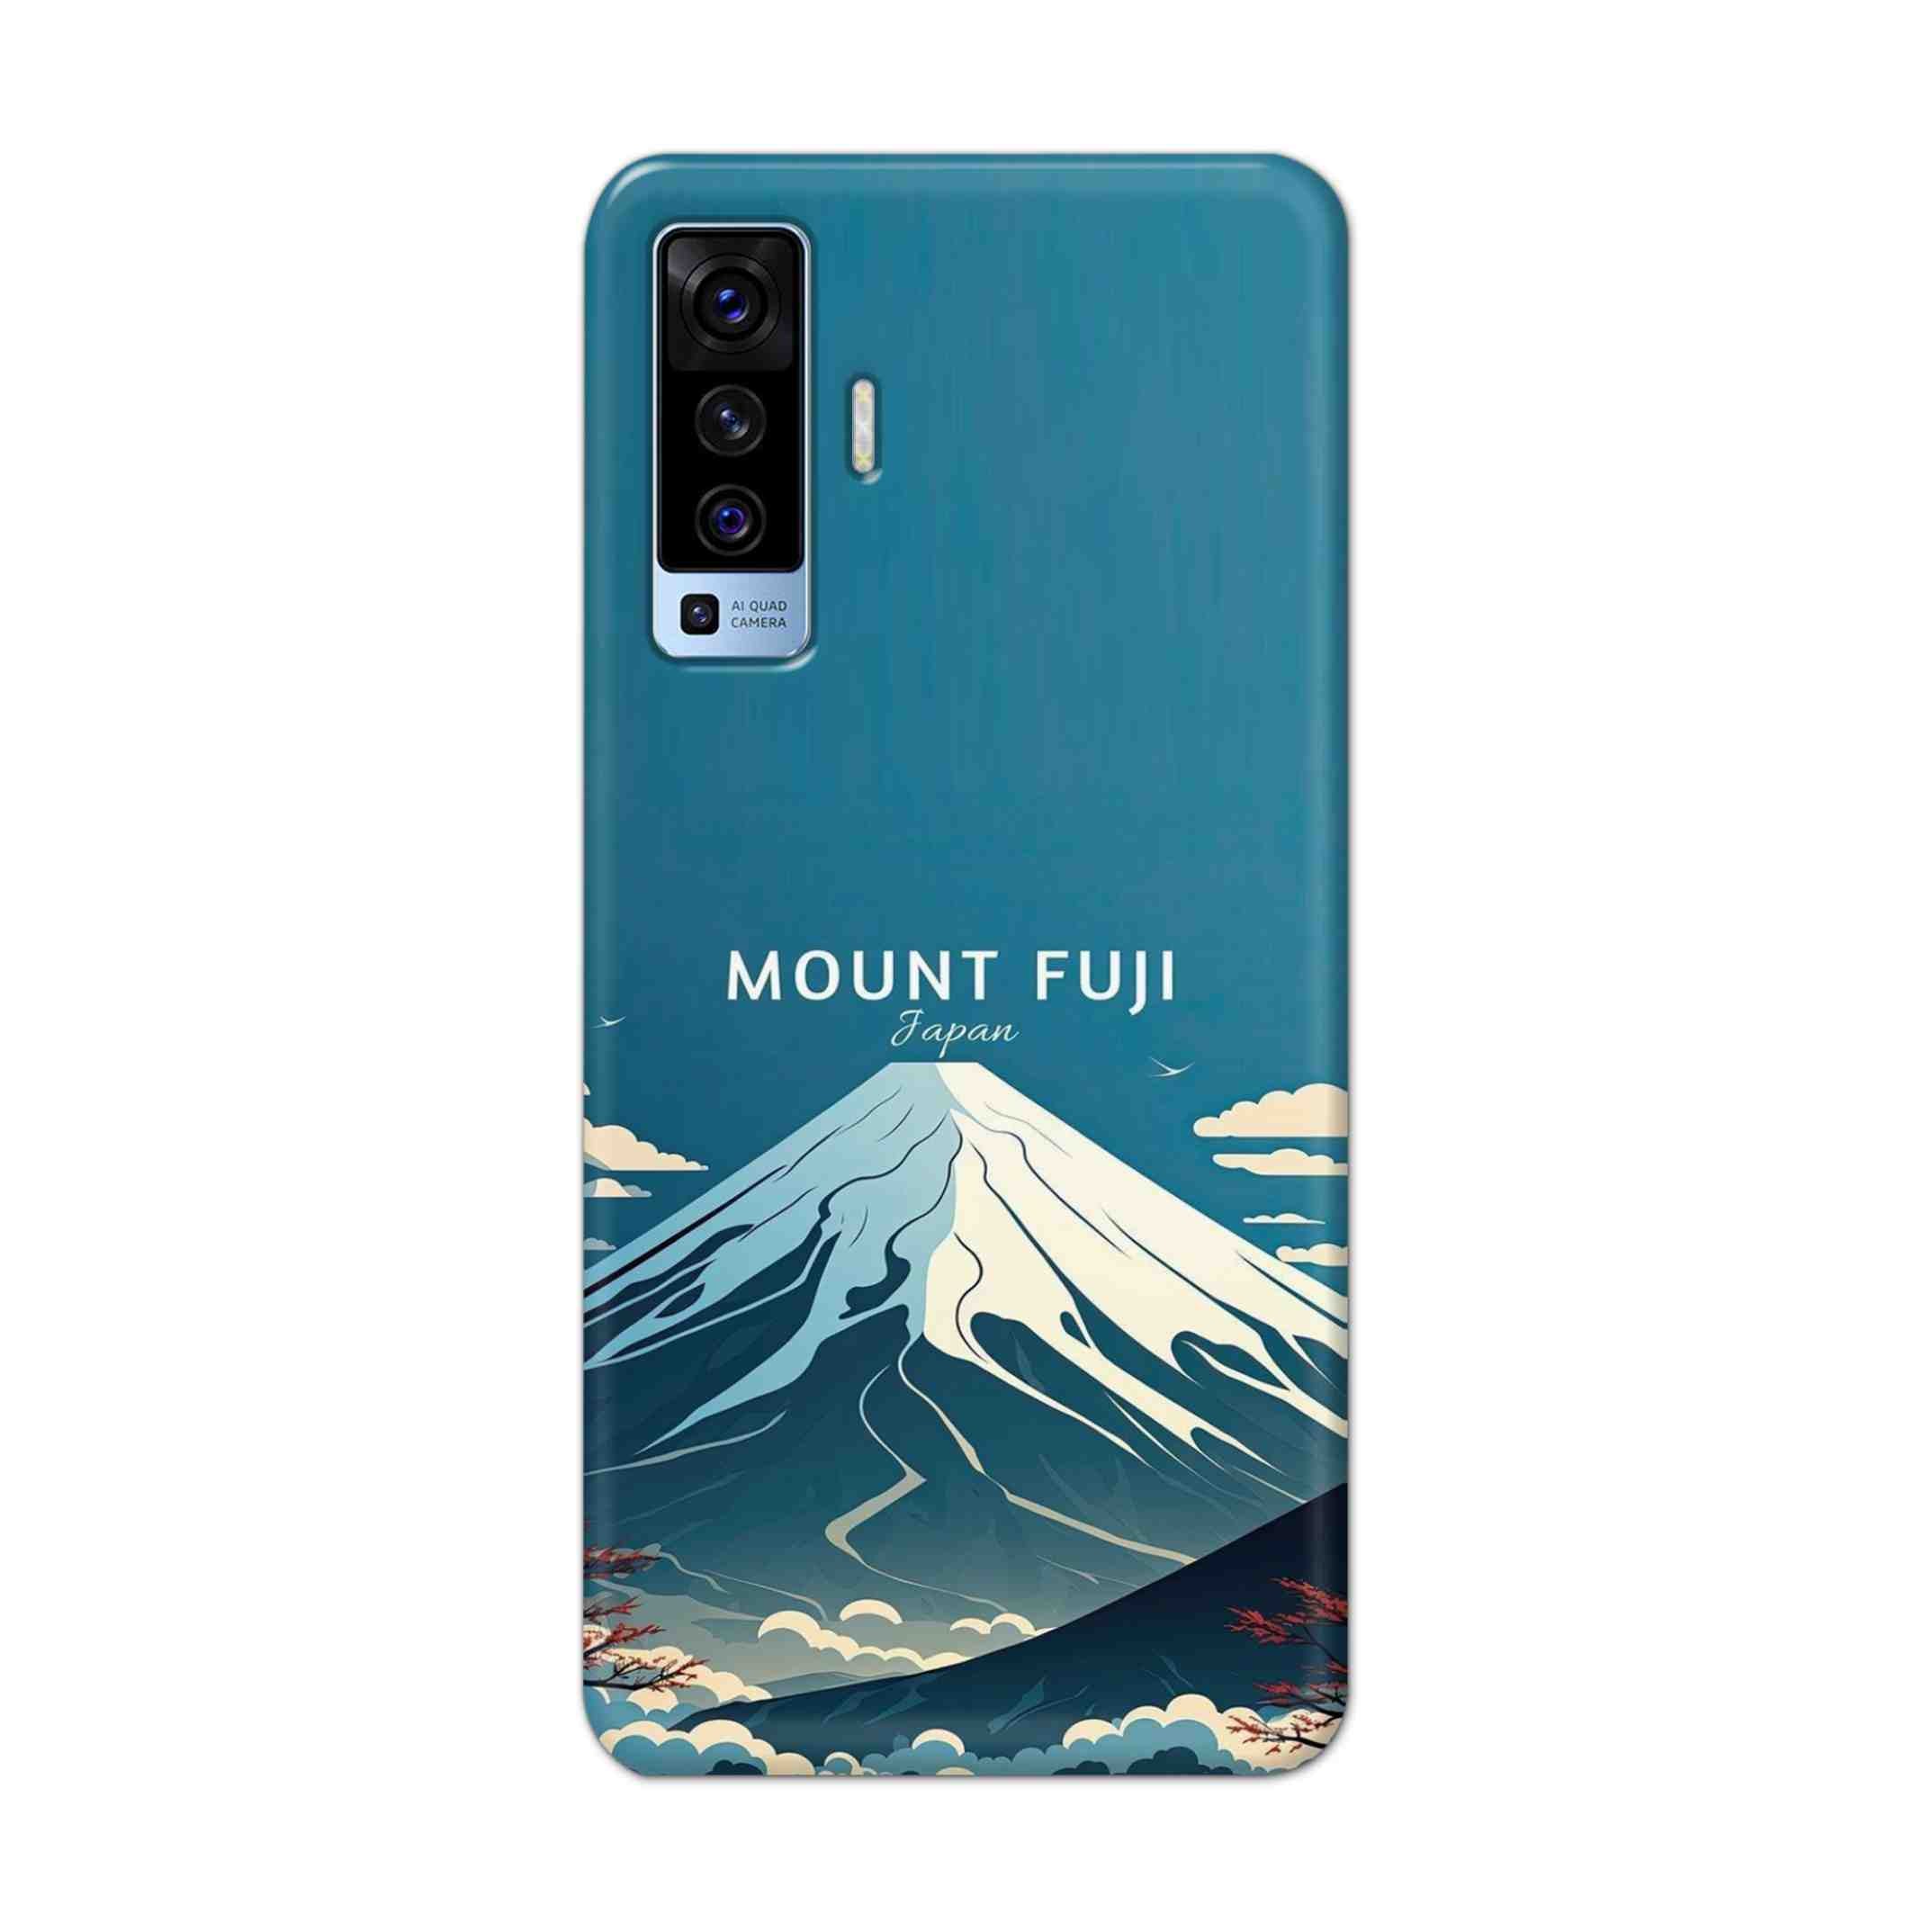 Buy Mount Fuji Hard Back Mobile Phone Case Cover For Vivo X50 Online